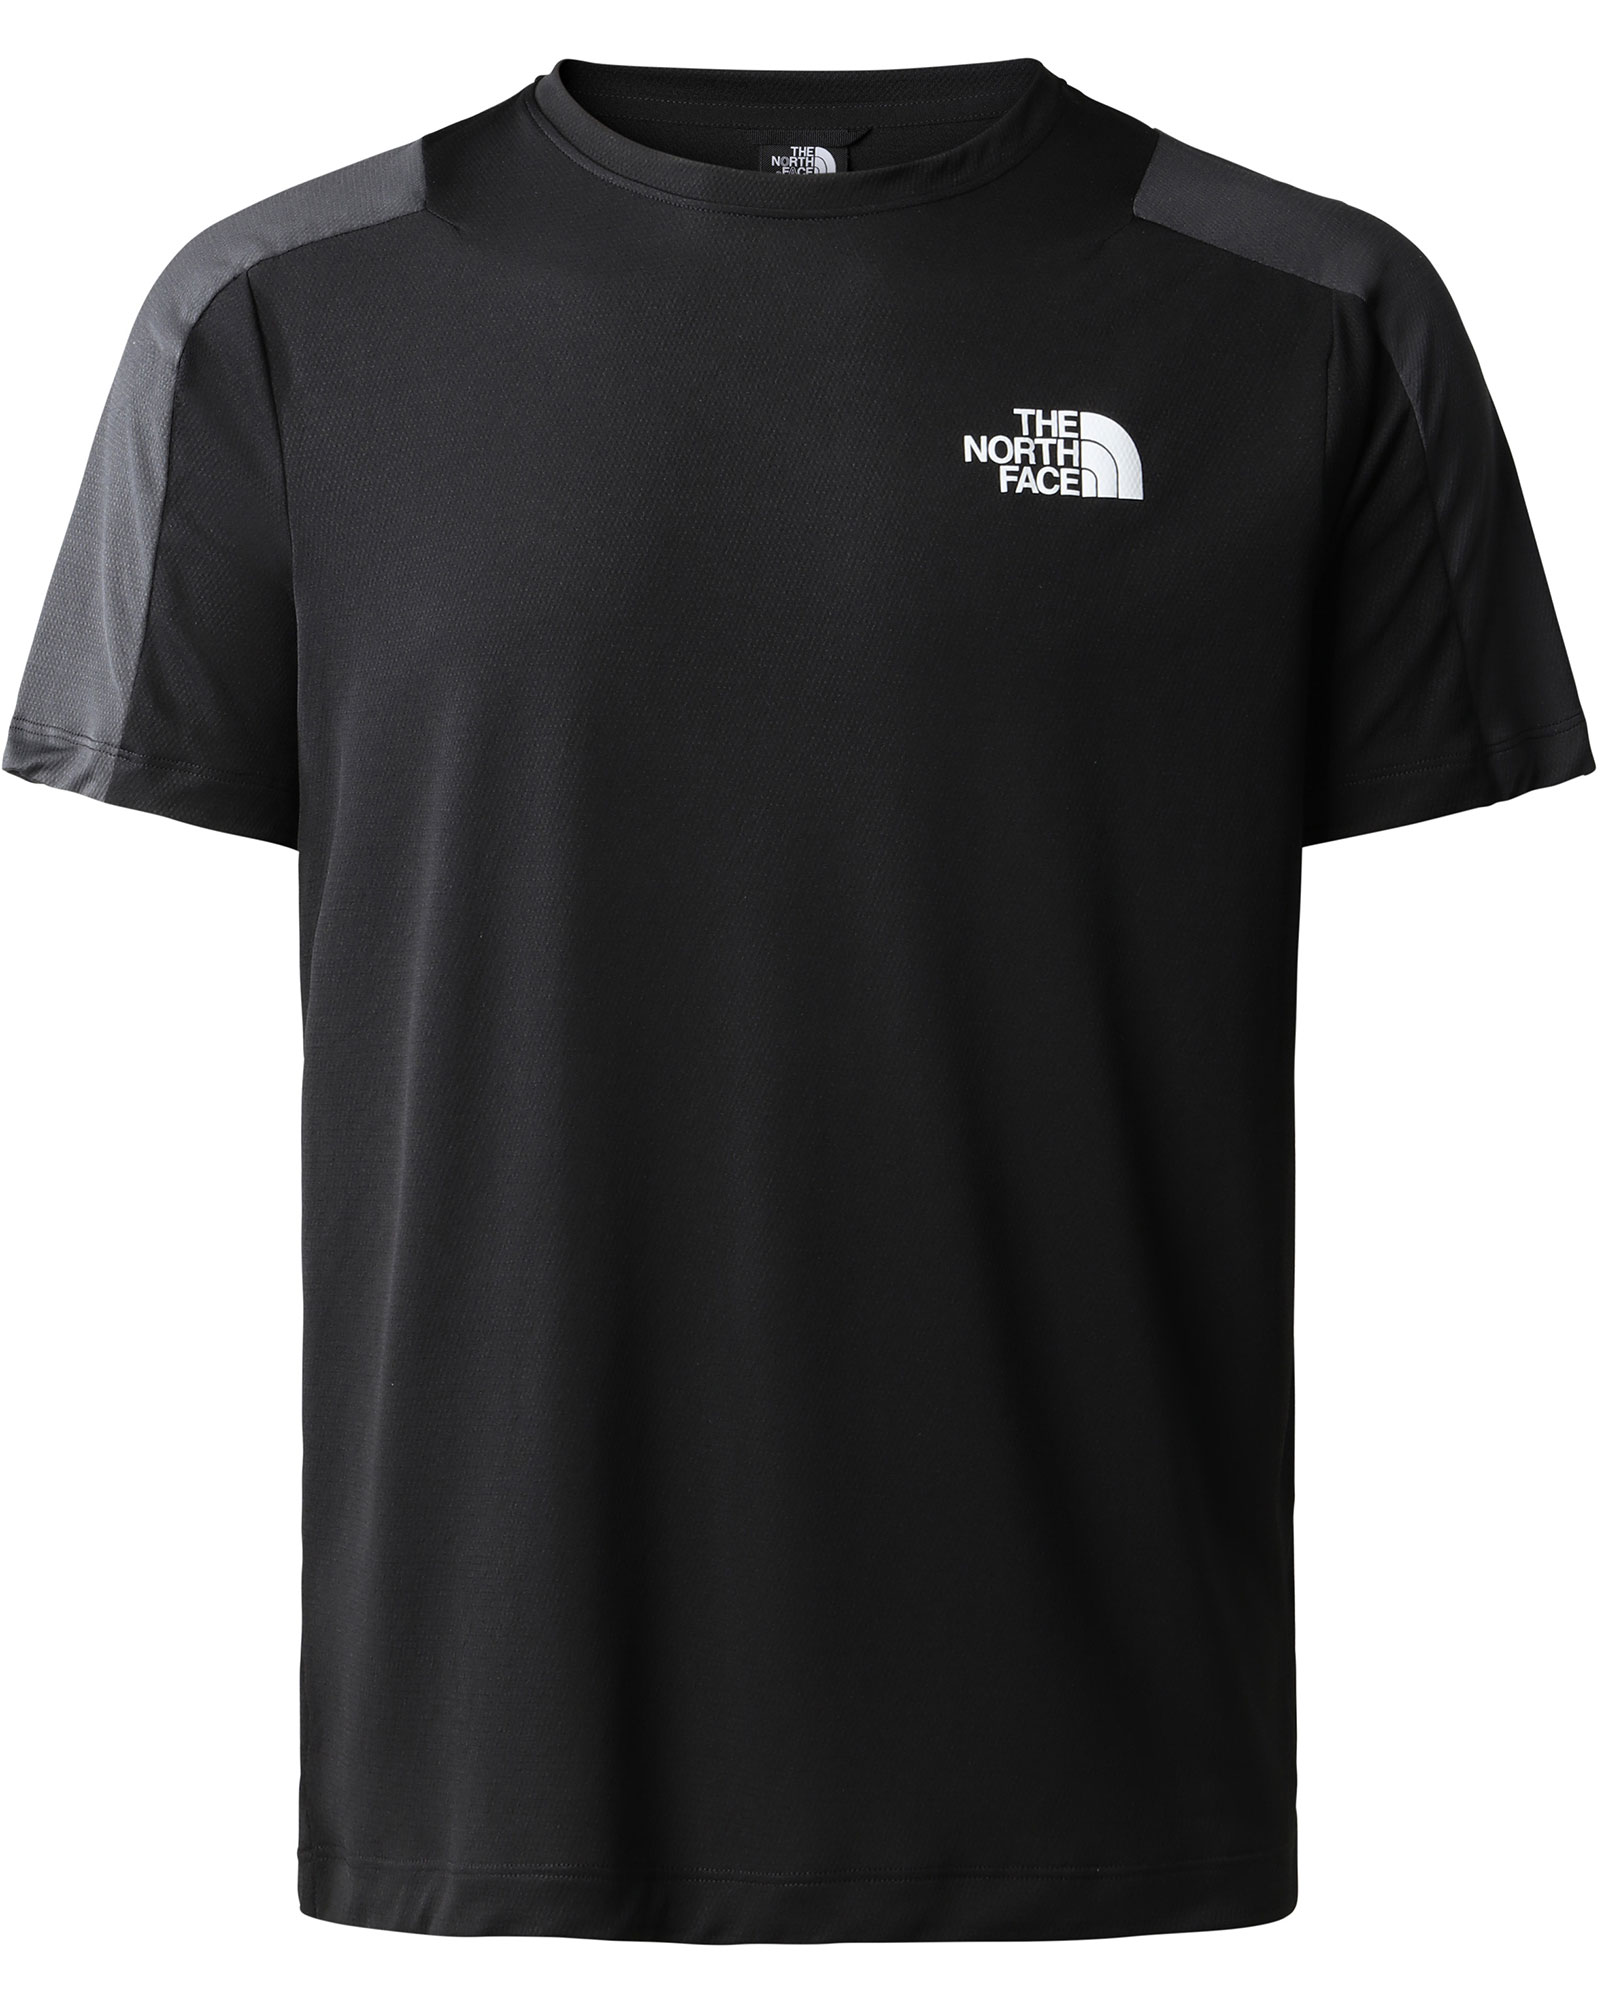 The North Face Men’s MA T Shirt - TNF Black/Asphalt Grey S